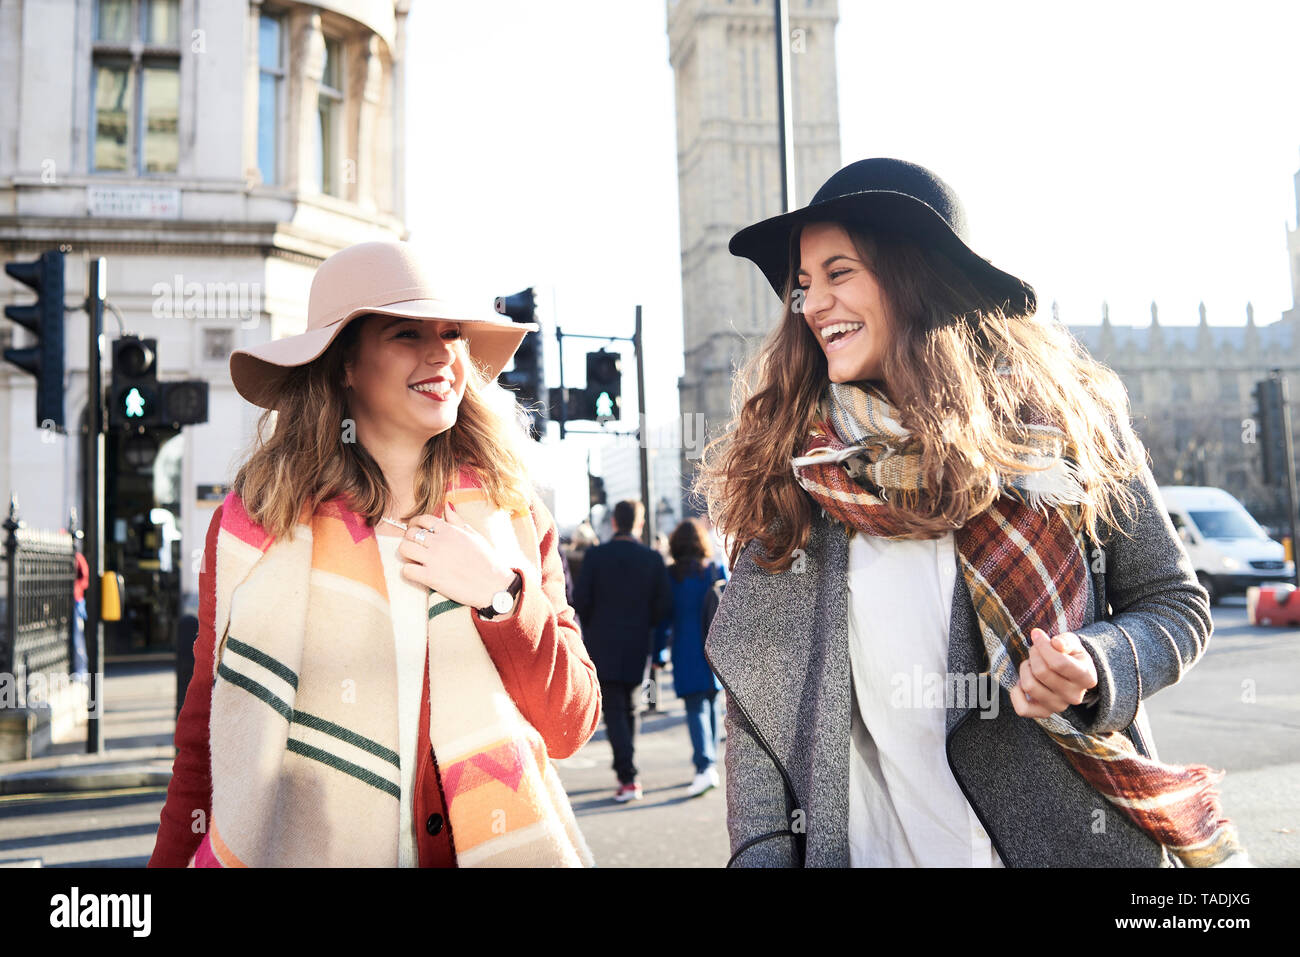 UK, London, two happy women in the city near Big Ben Stock Photo